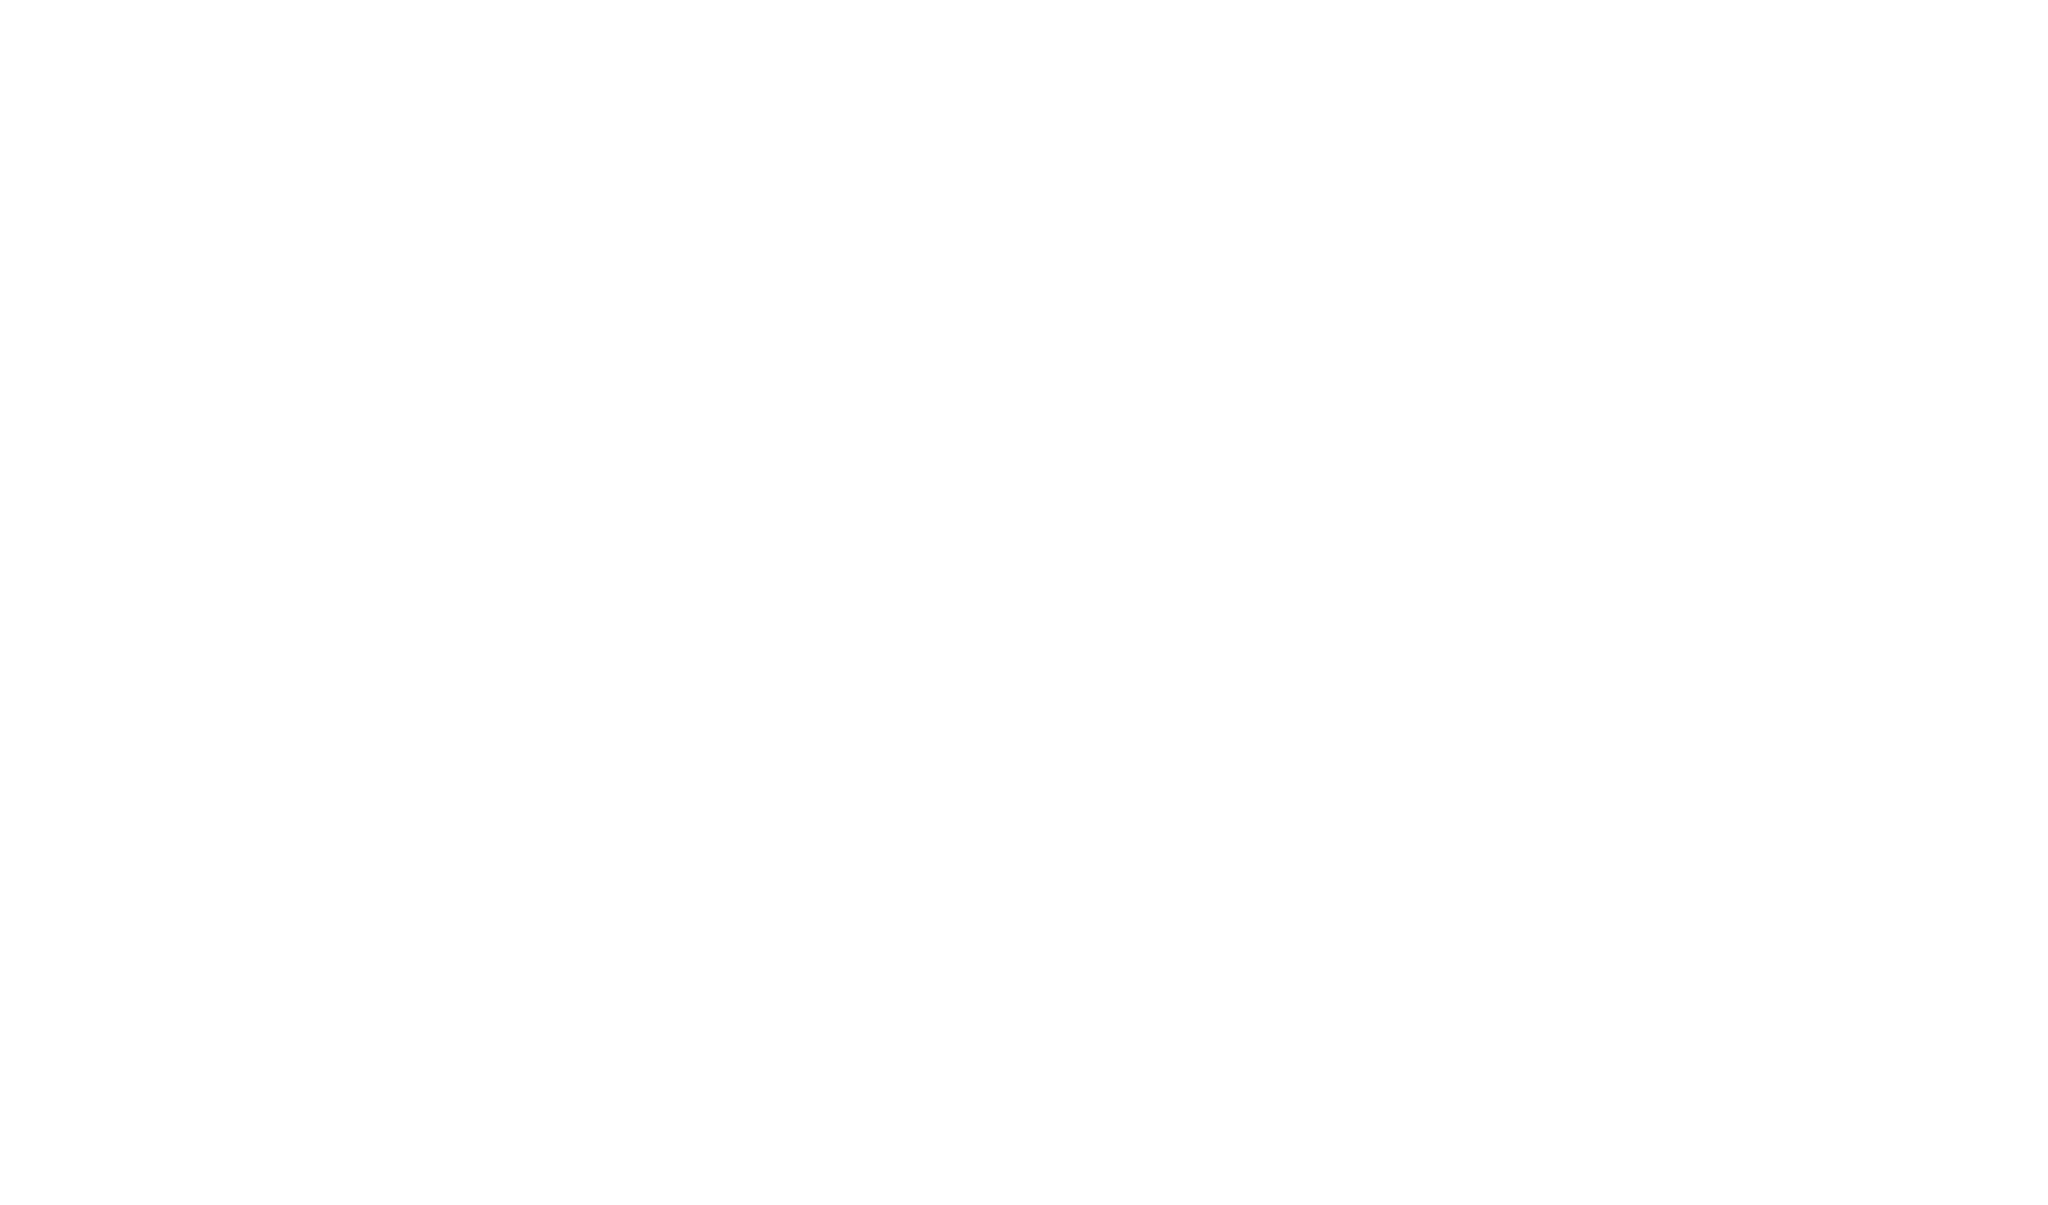 The adidas logo